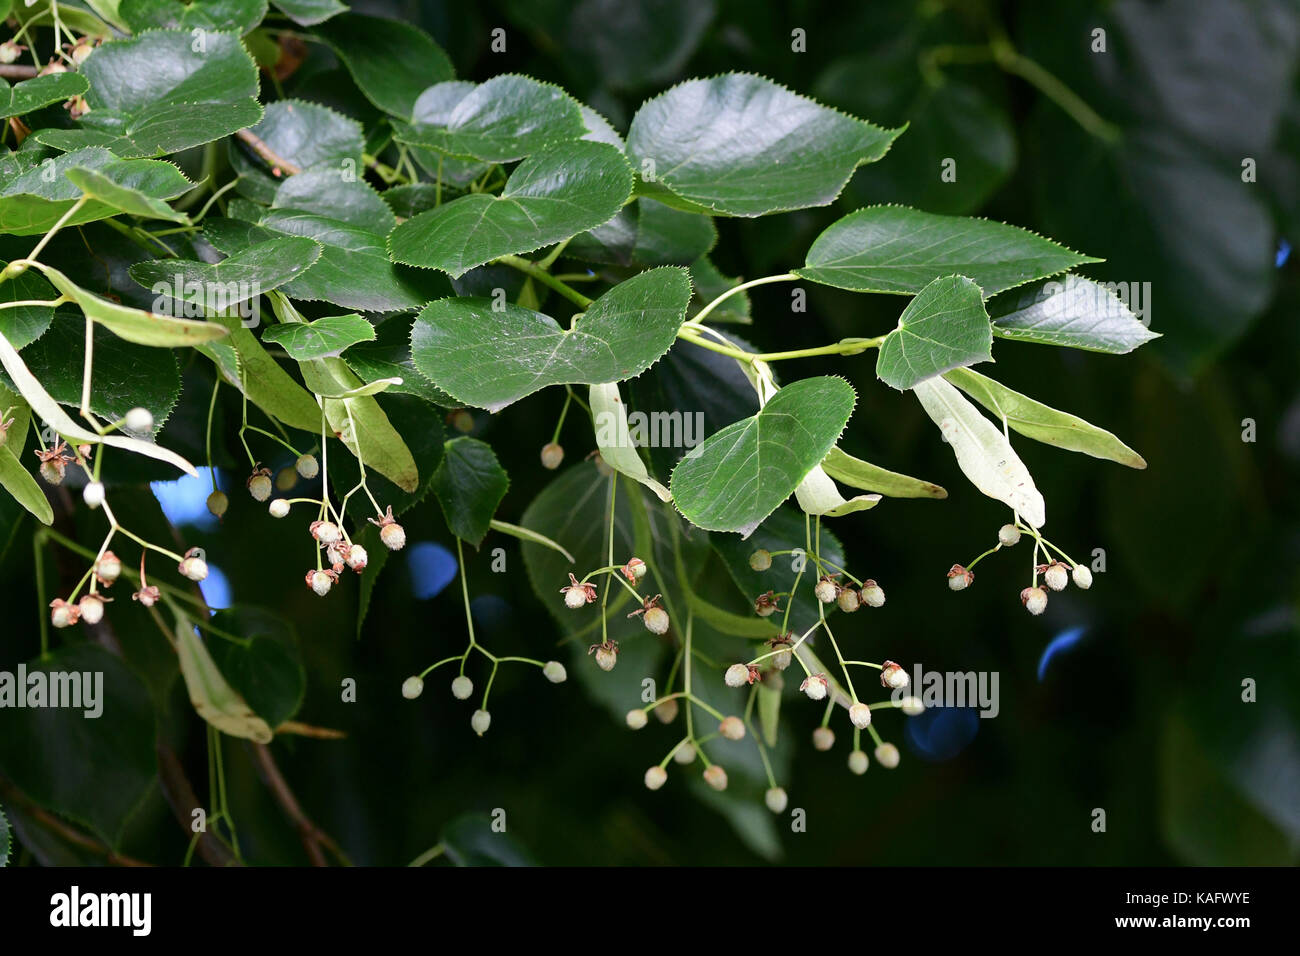 Peu de feuilles de tilleul (Tilia cordata) brindilles avec fruits, face inférieure des feuilles bien visibles Banque D'Images